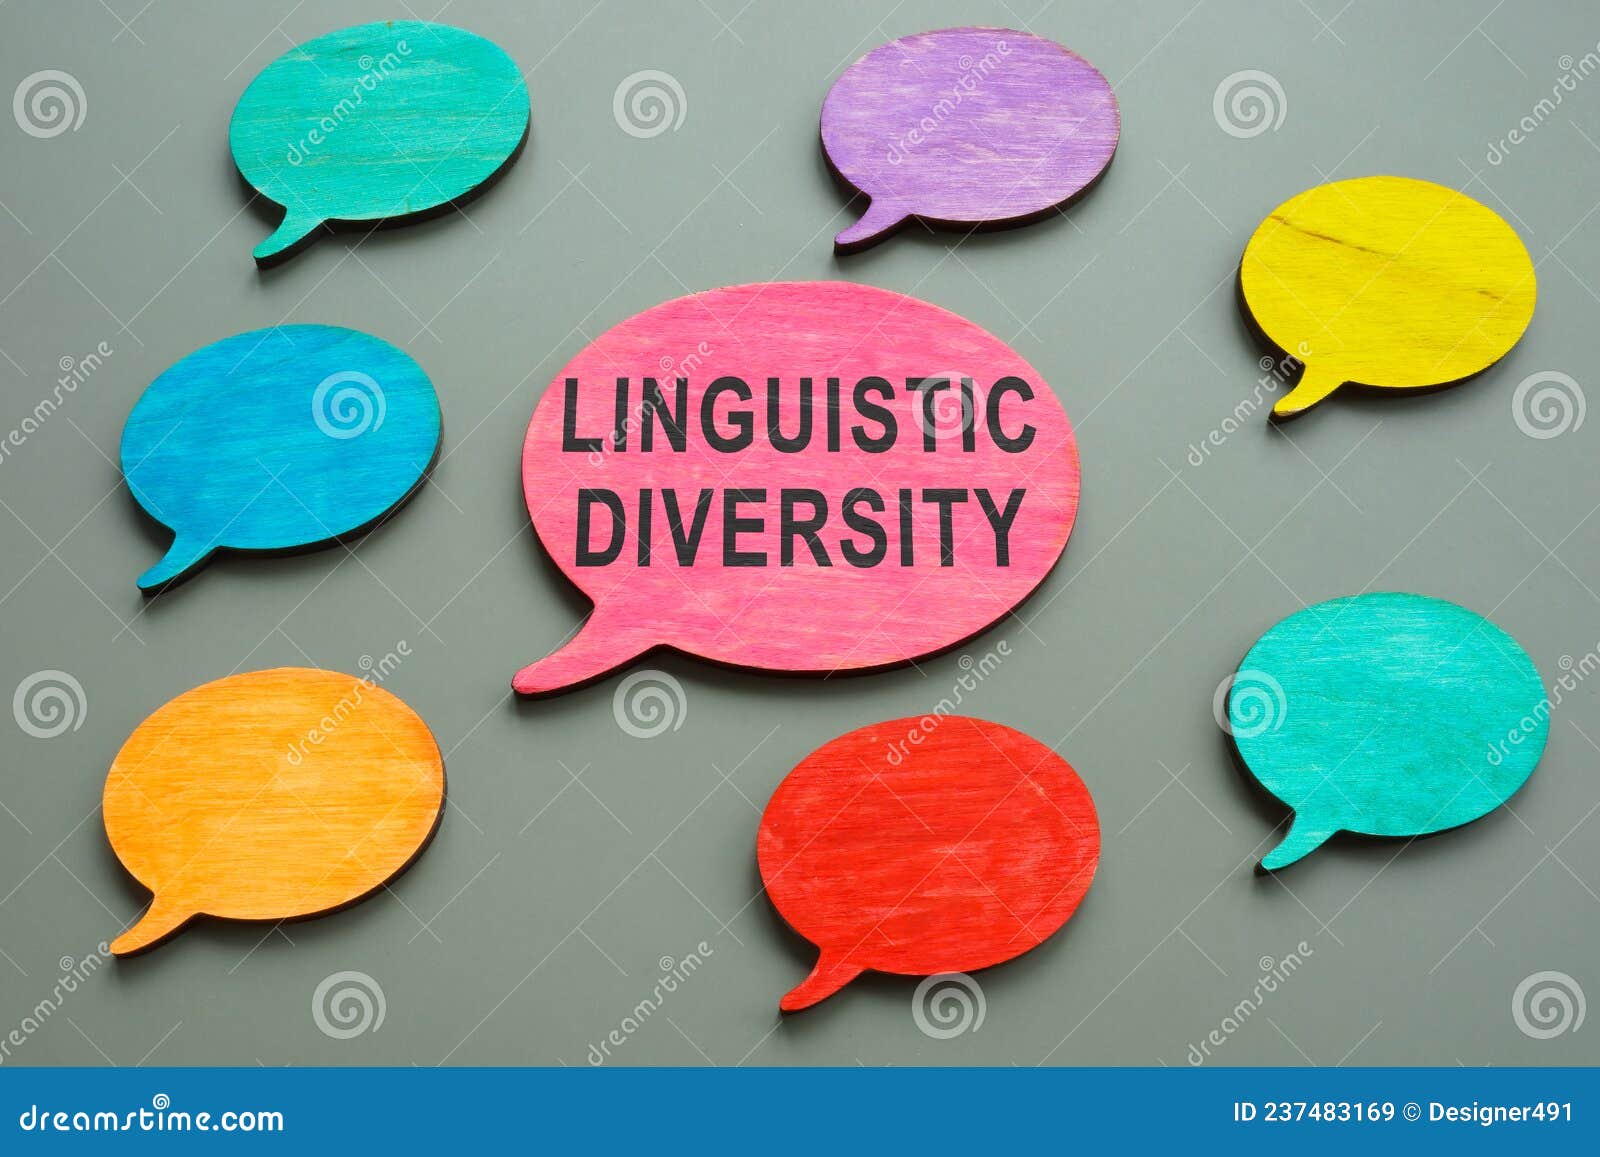 linguistic diversity words on the speech bubble.